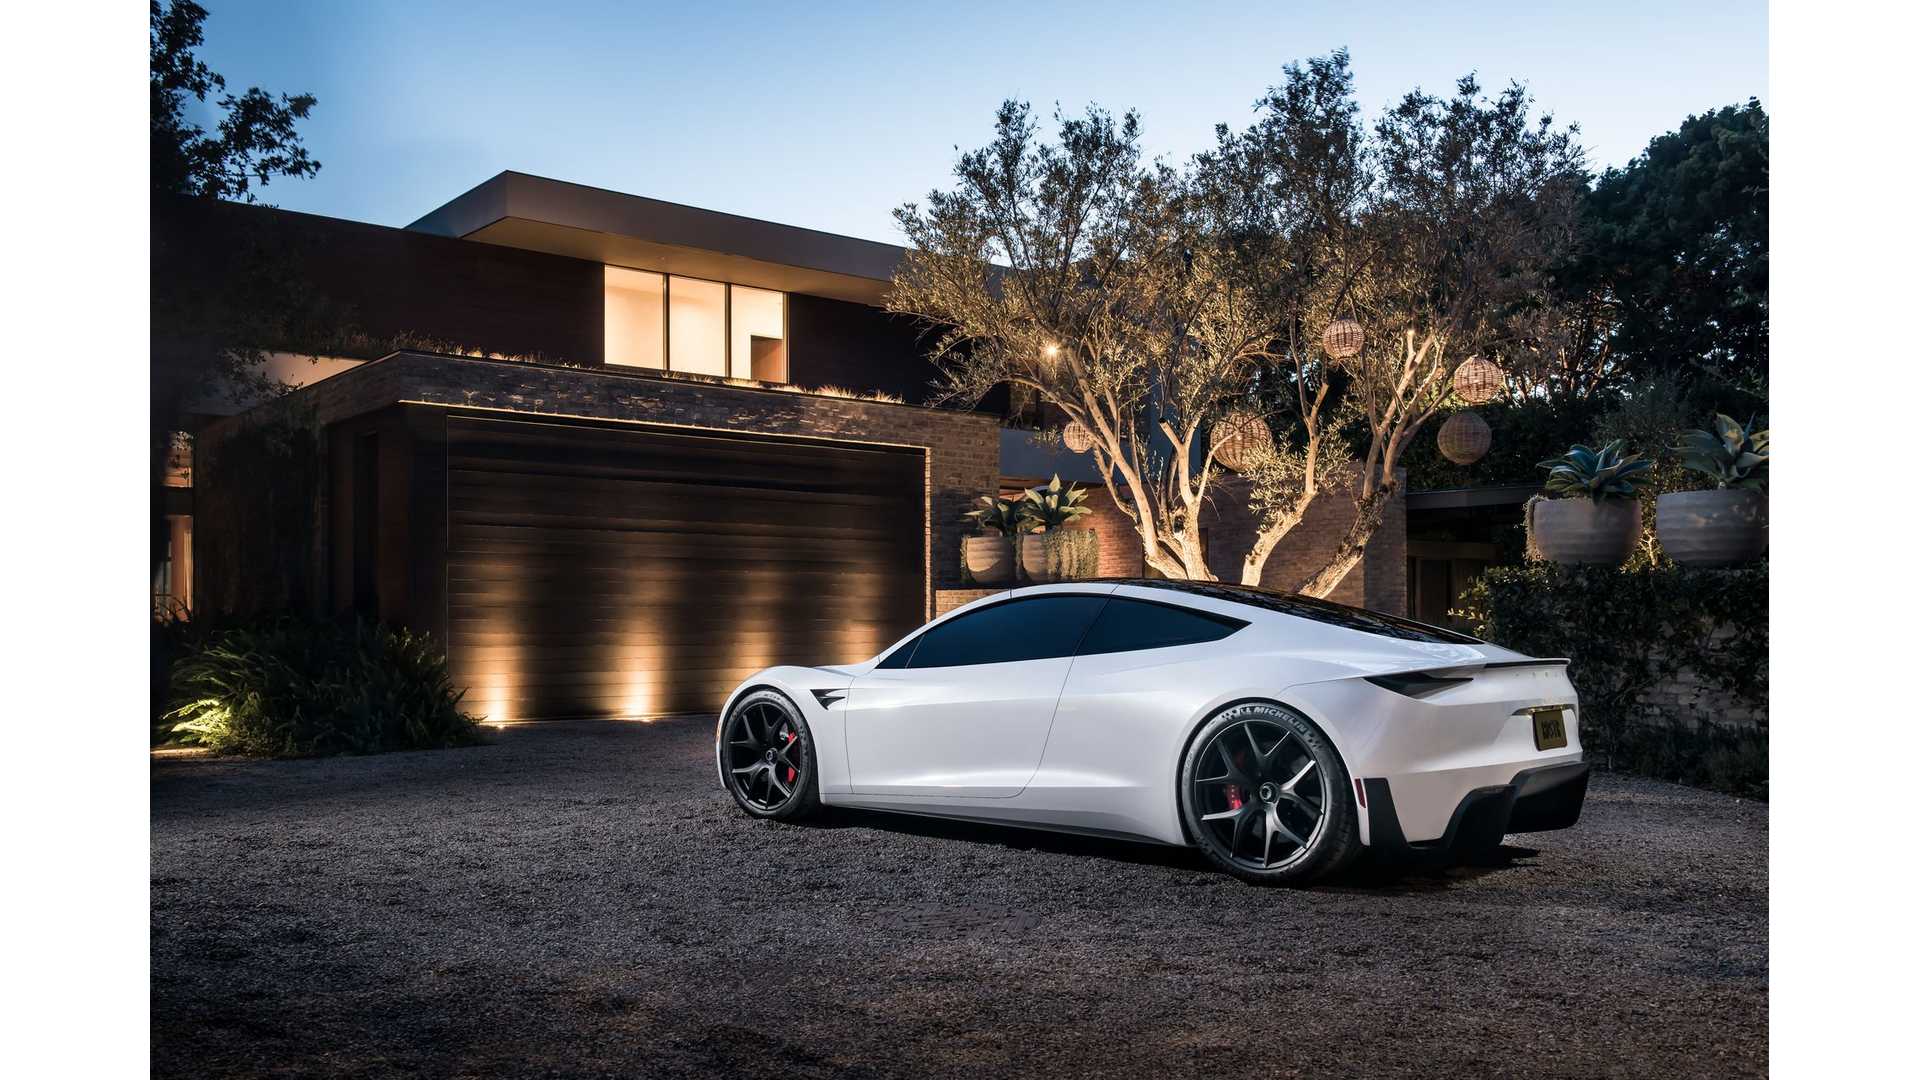 Tesla Roadster Delights Us In New Image: Wallpaper + Video